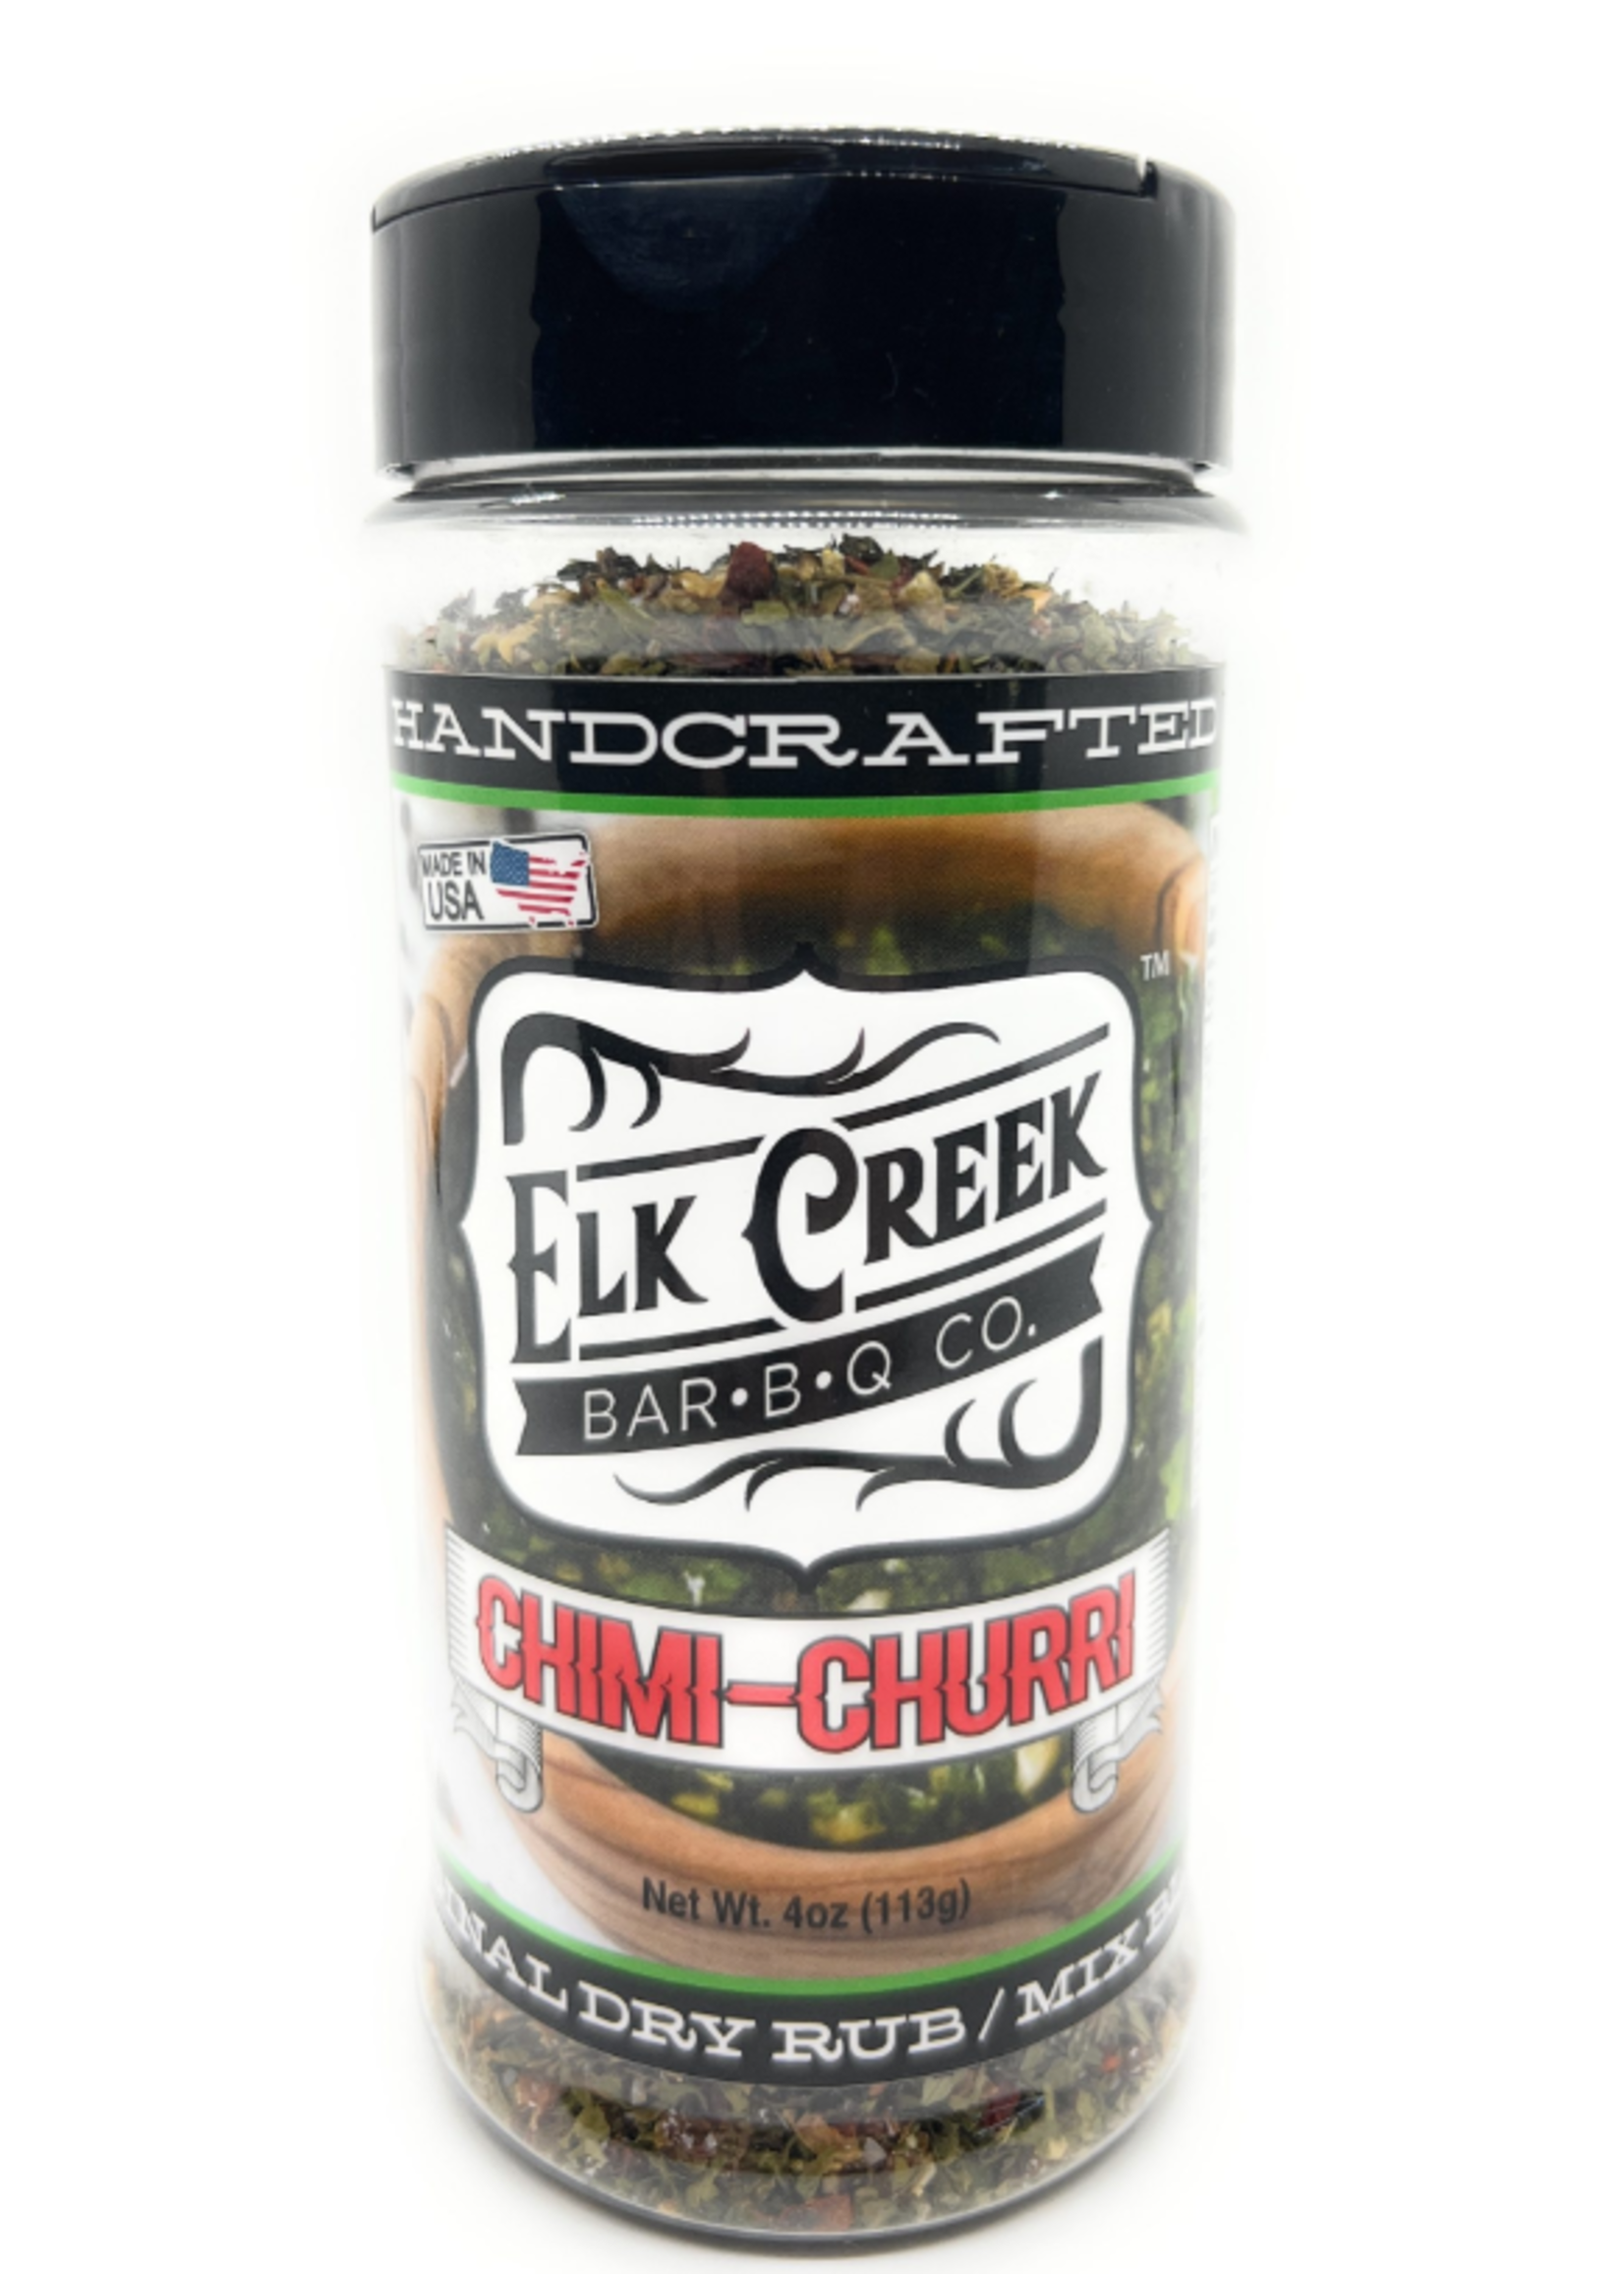 Elk Creek Bar-B-Q Co. Elk Creek Chimi-Churri